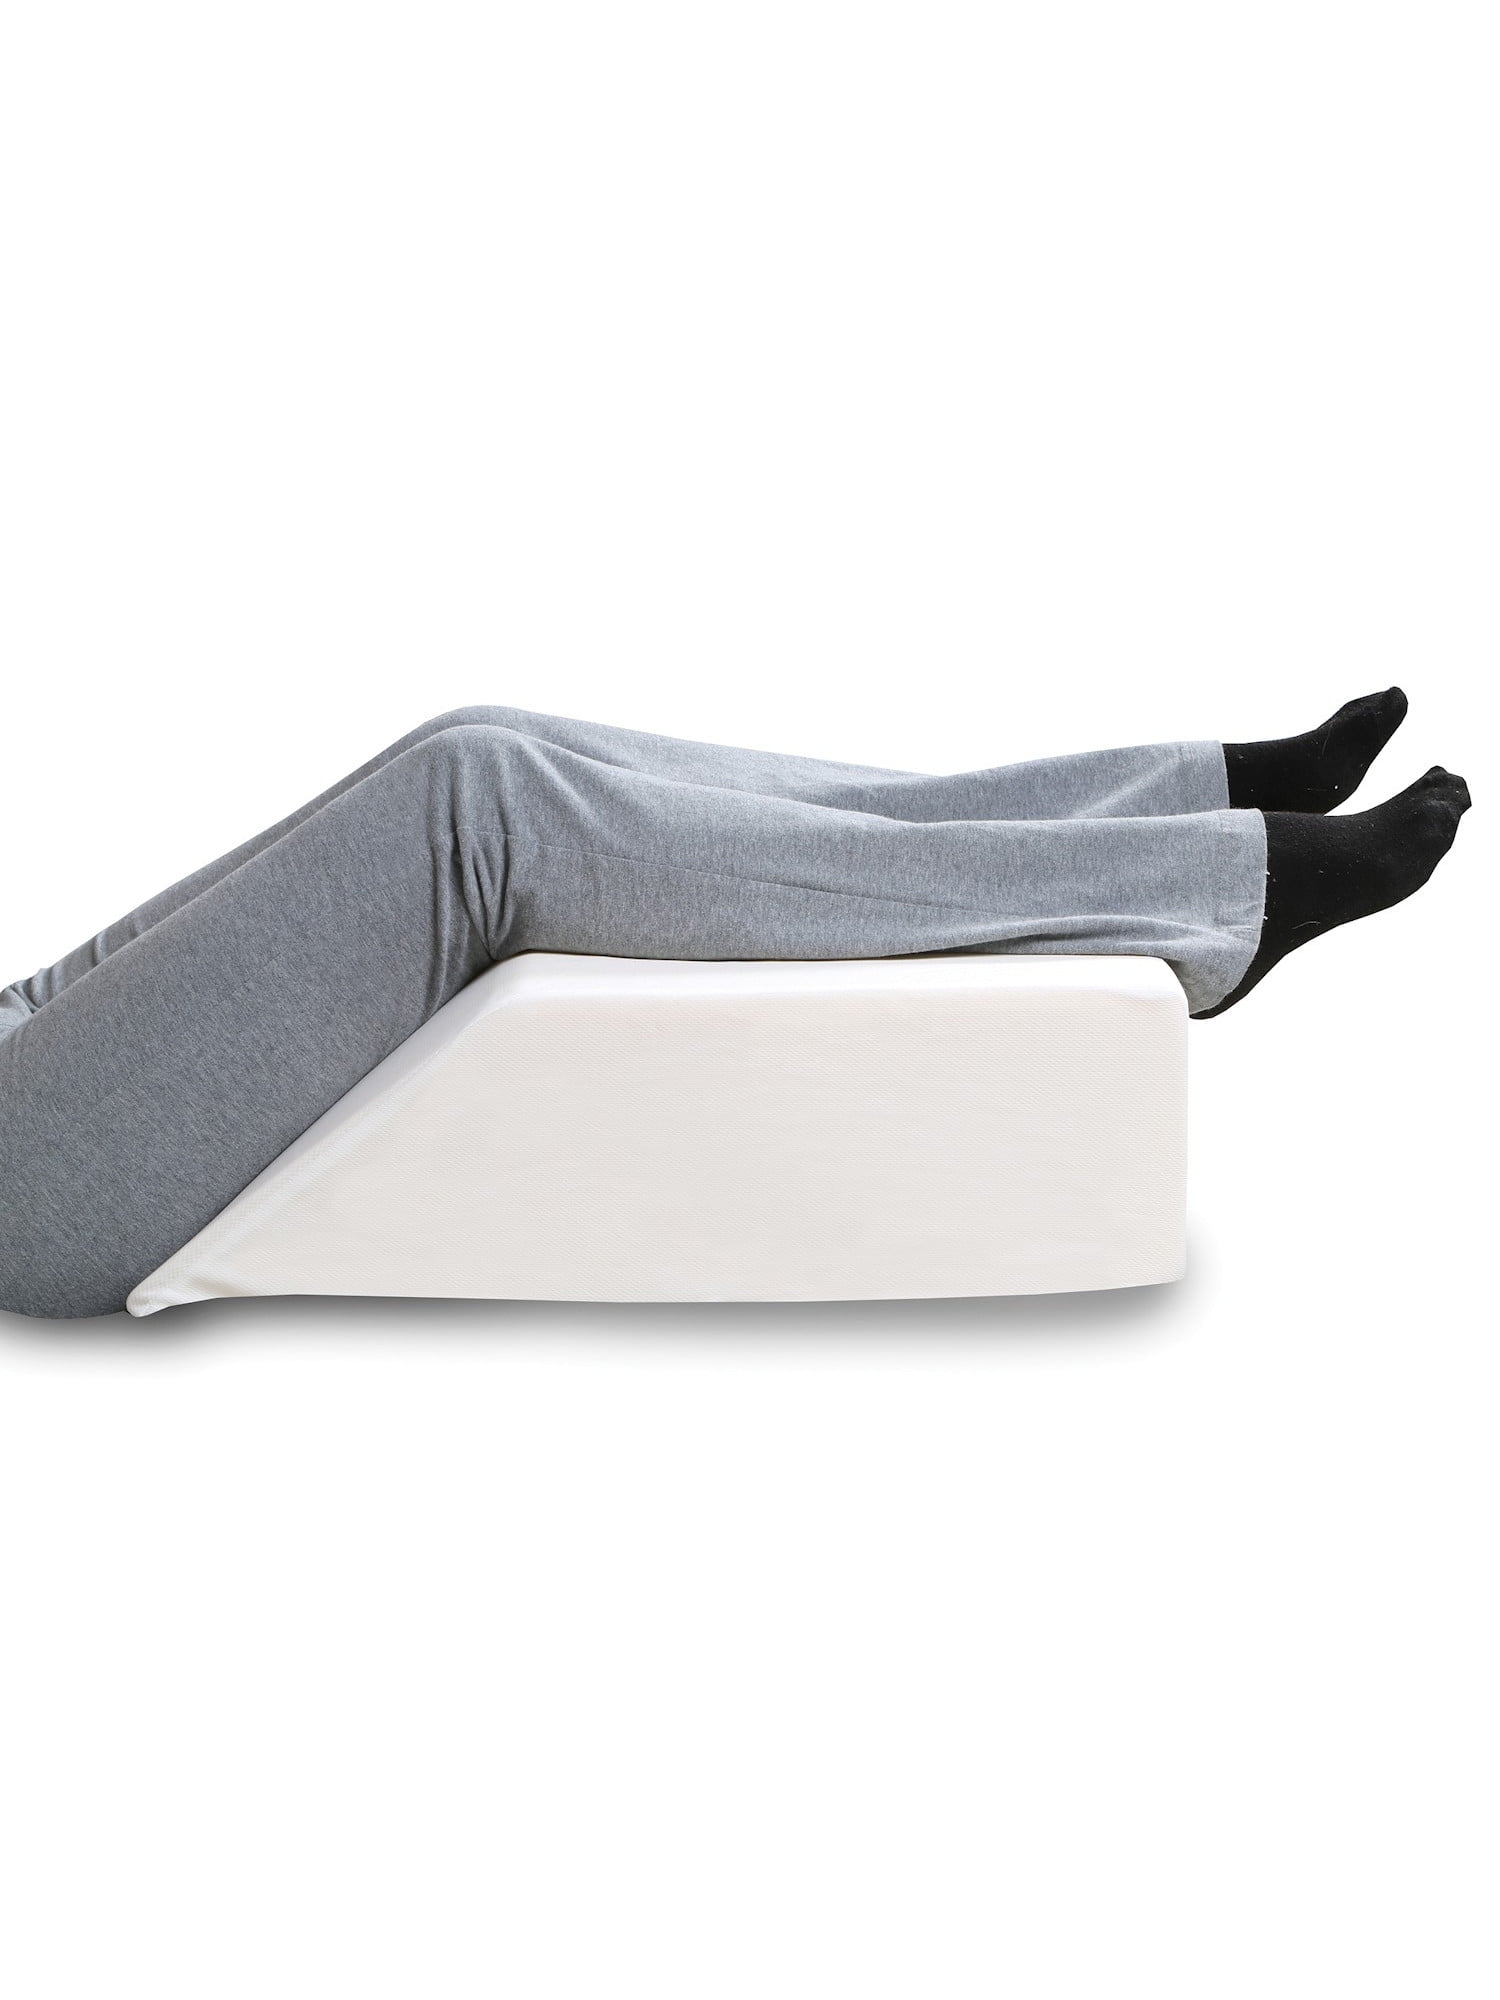 leg elevation pillow cover